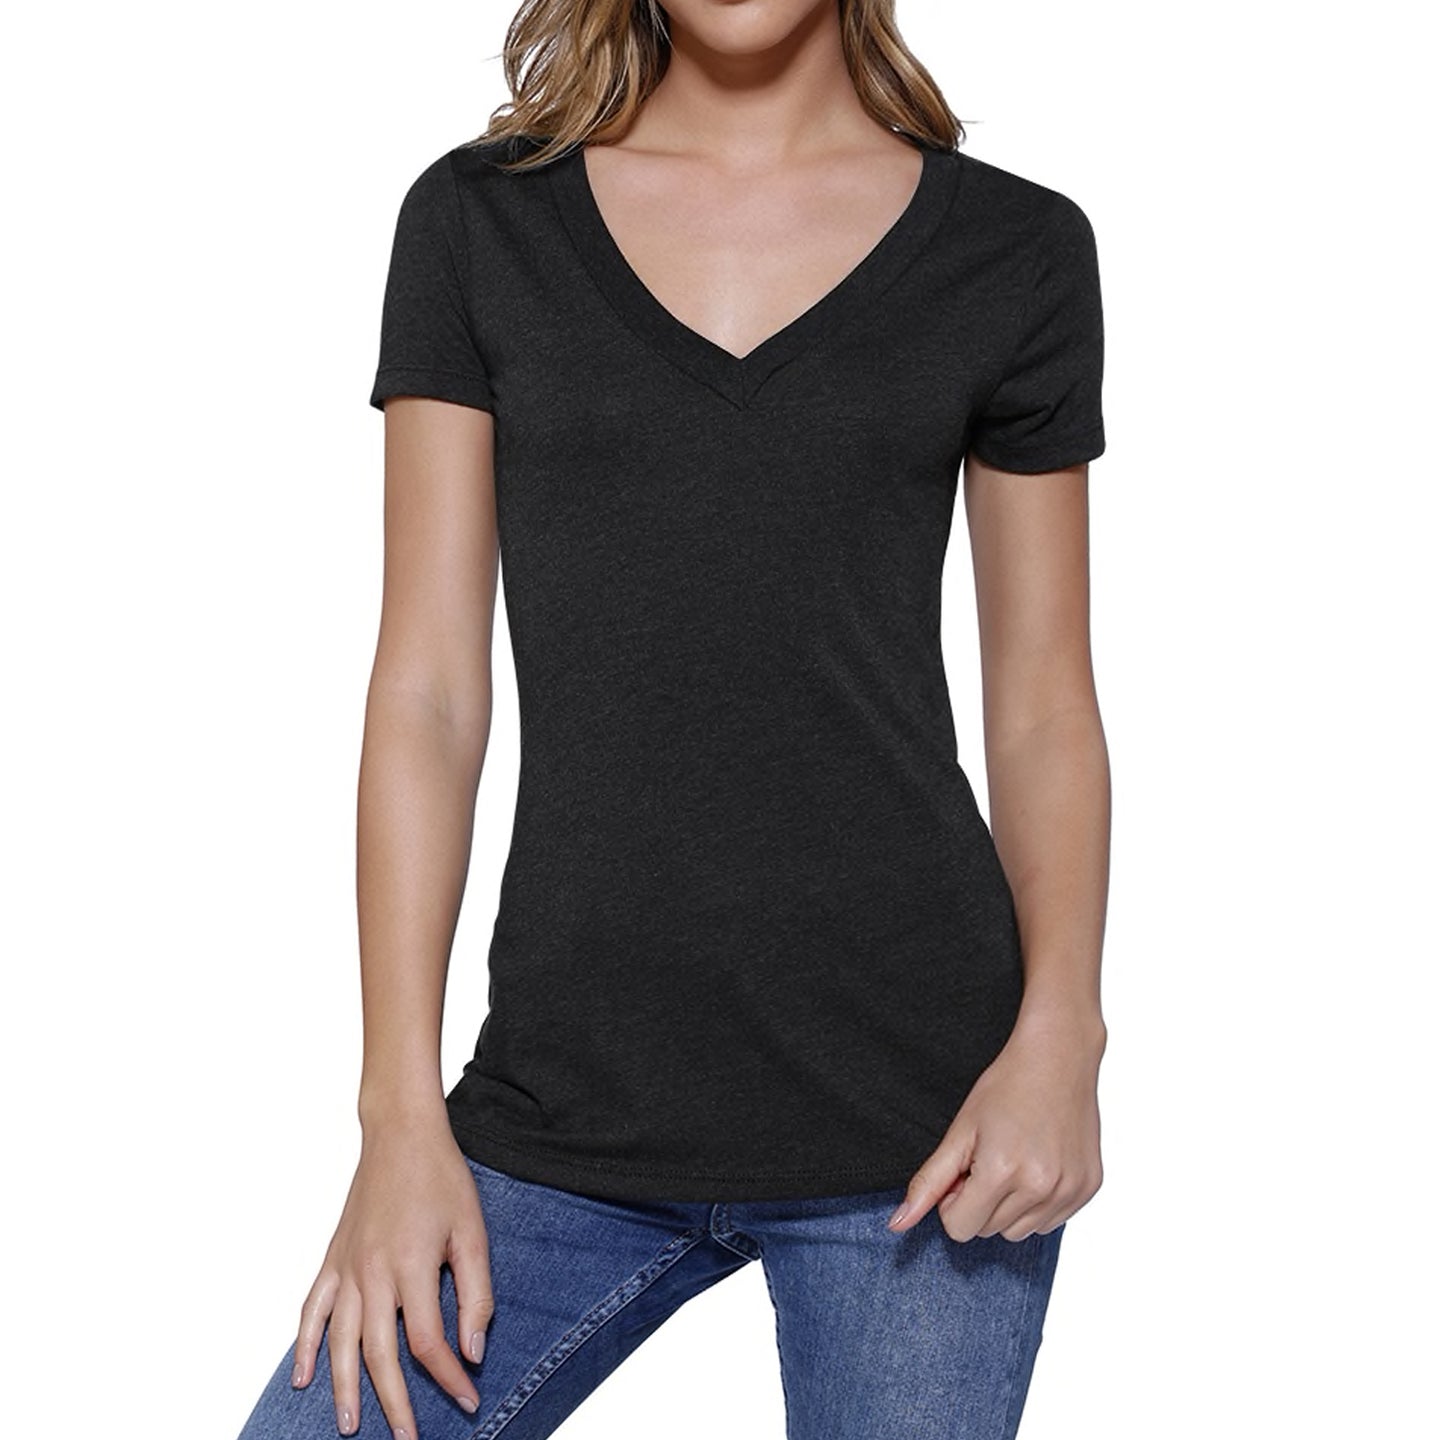 W310T - Womens Tri-Blend V-Neck T-Shirt